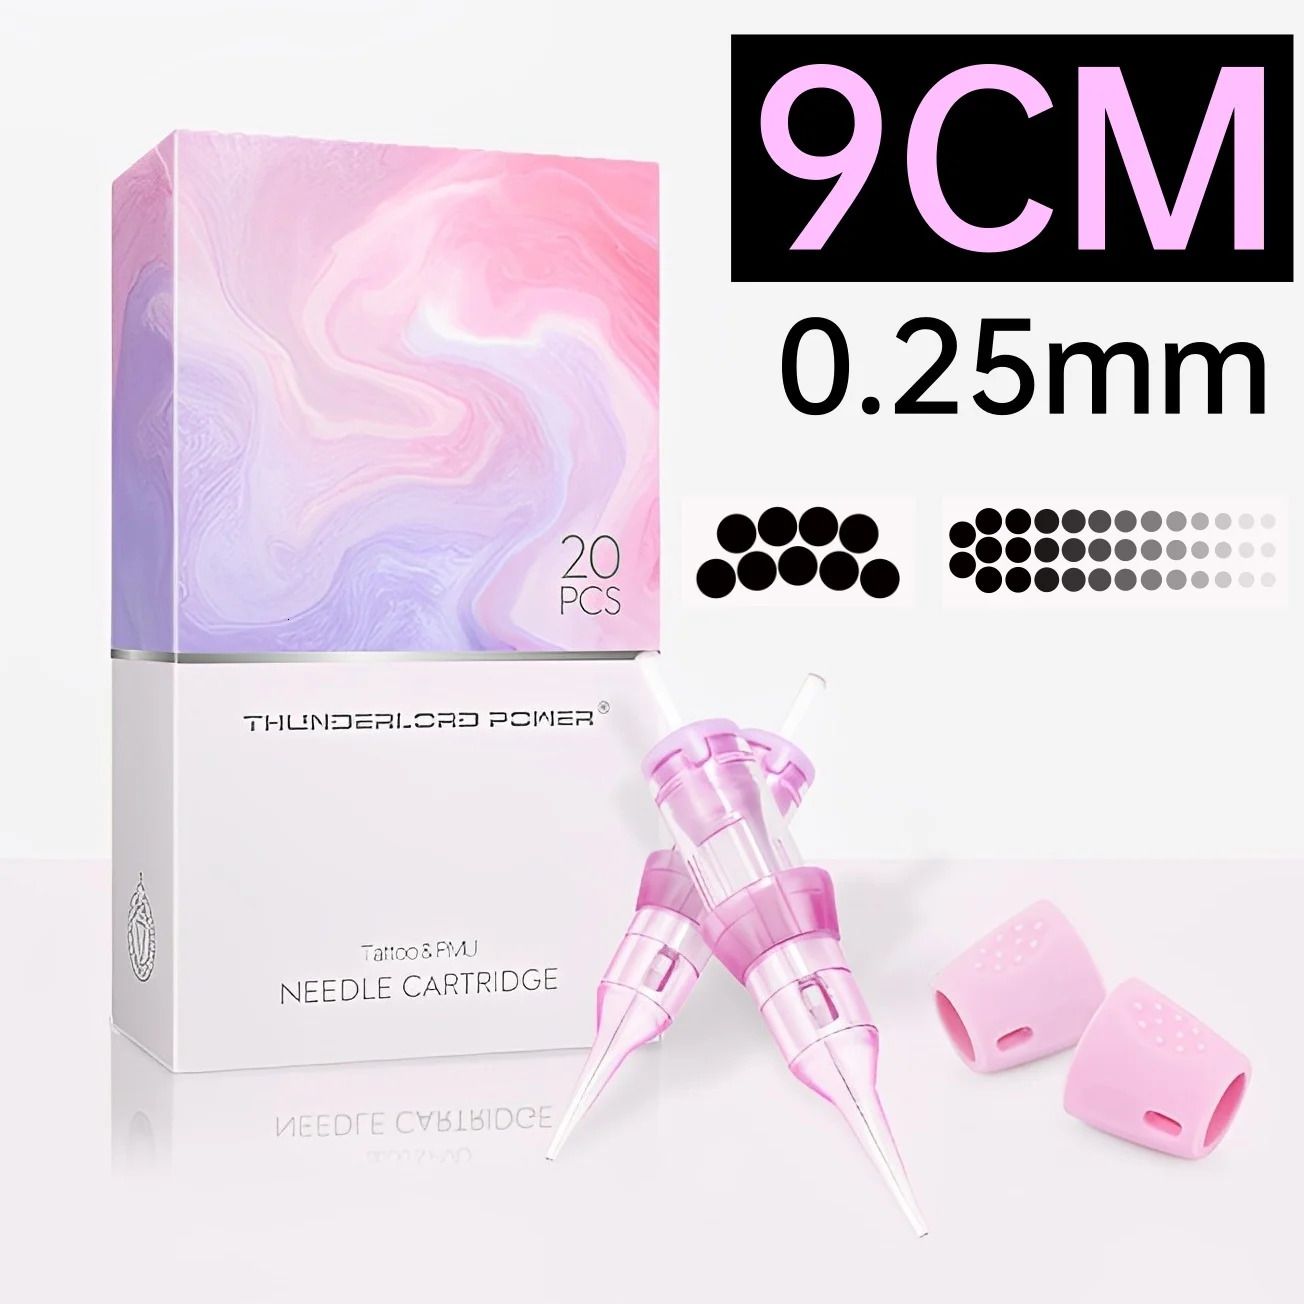 9cm-0.25mm (pink)